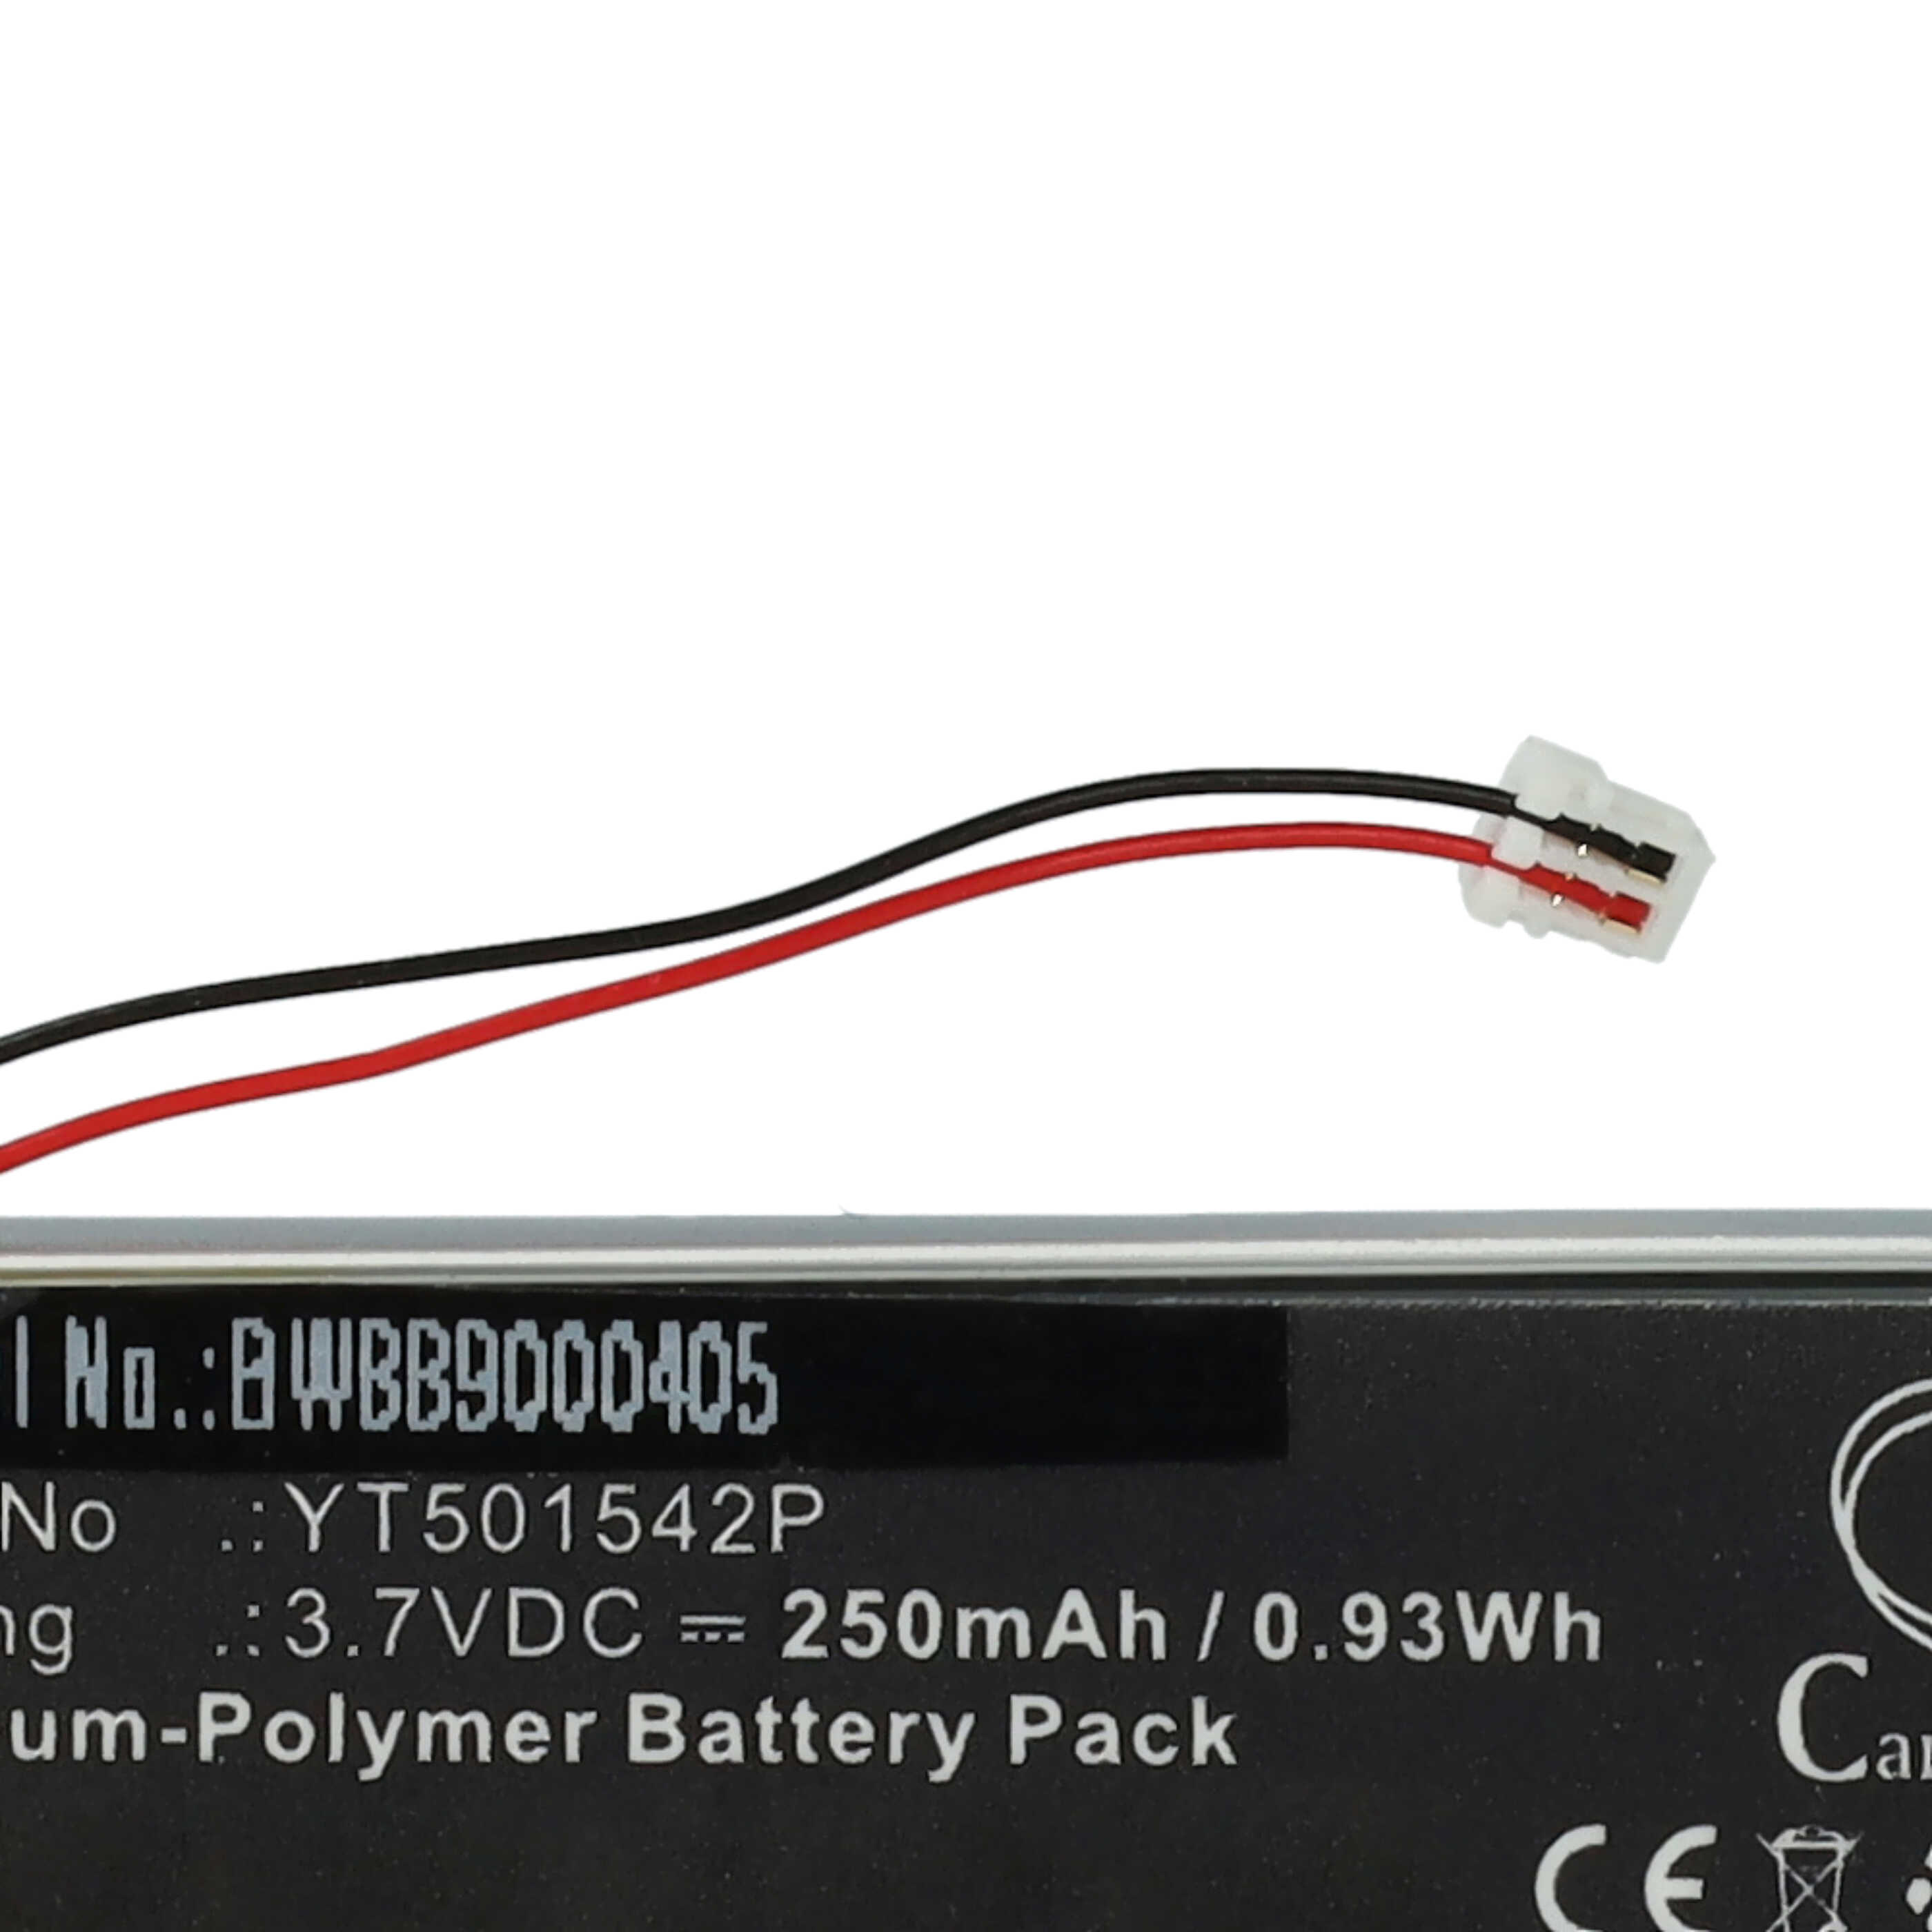 Wireless Headset Battery Replacement for Sena YT501542P - 250mAh 3.7V Li-polymer